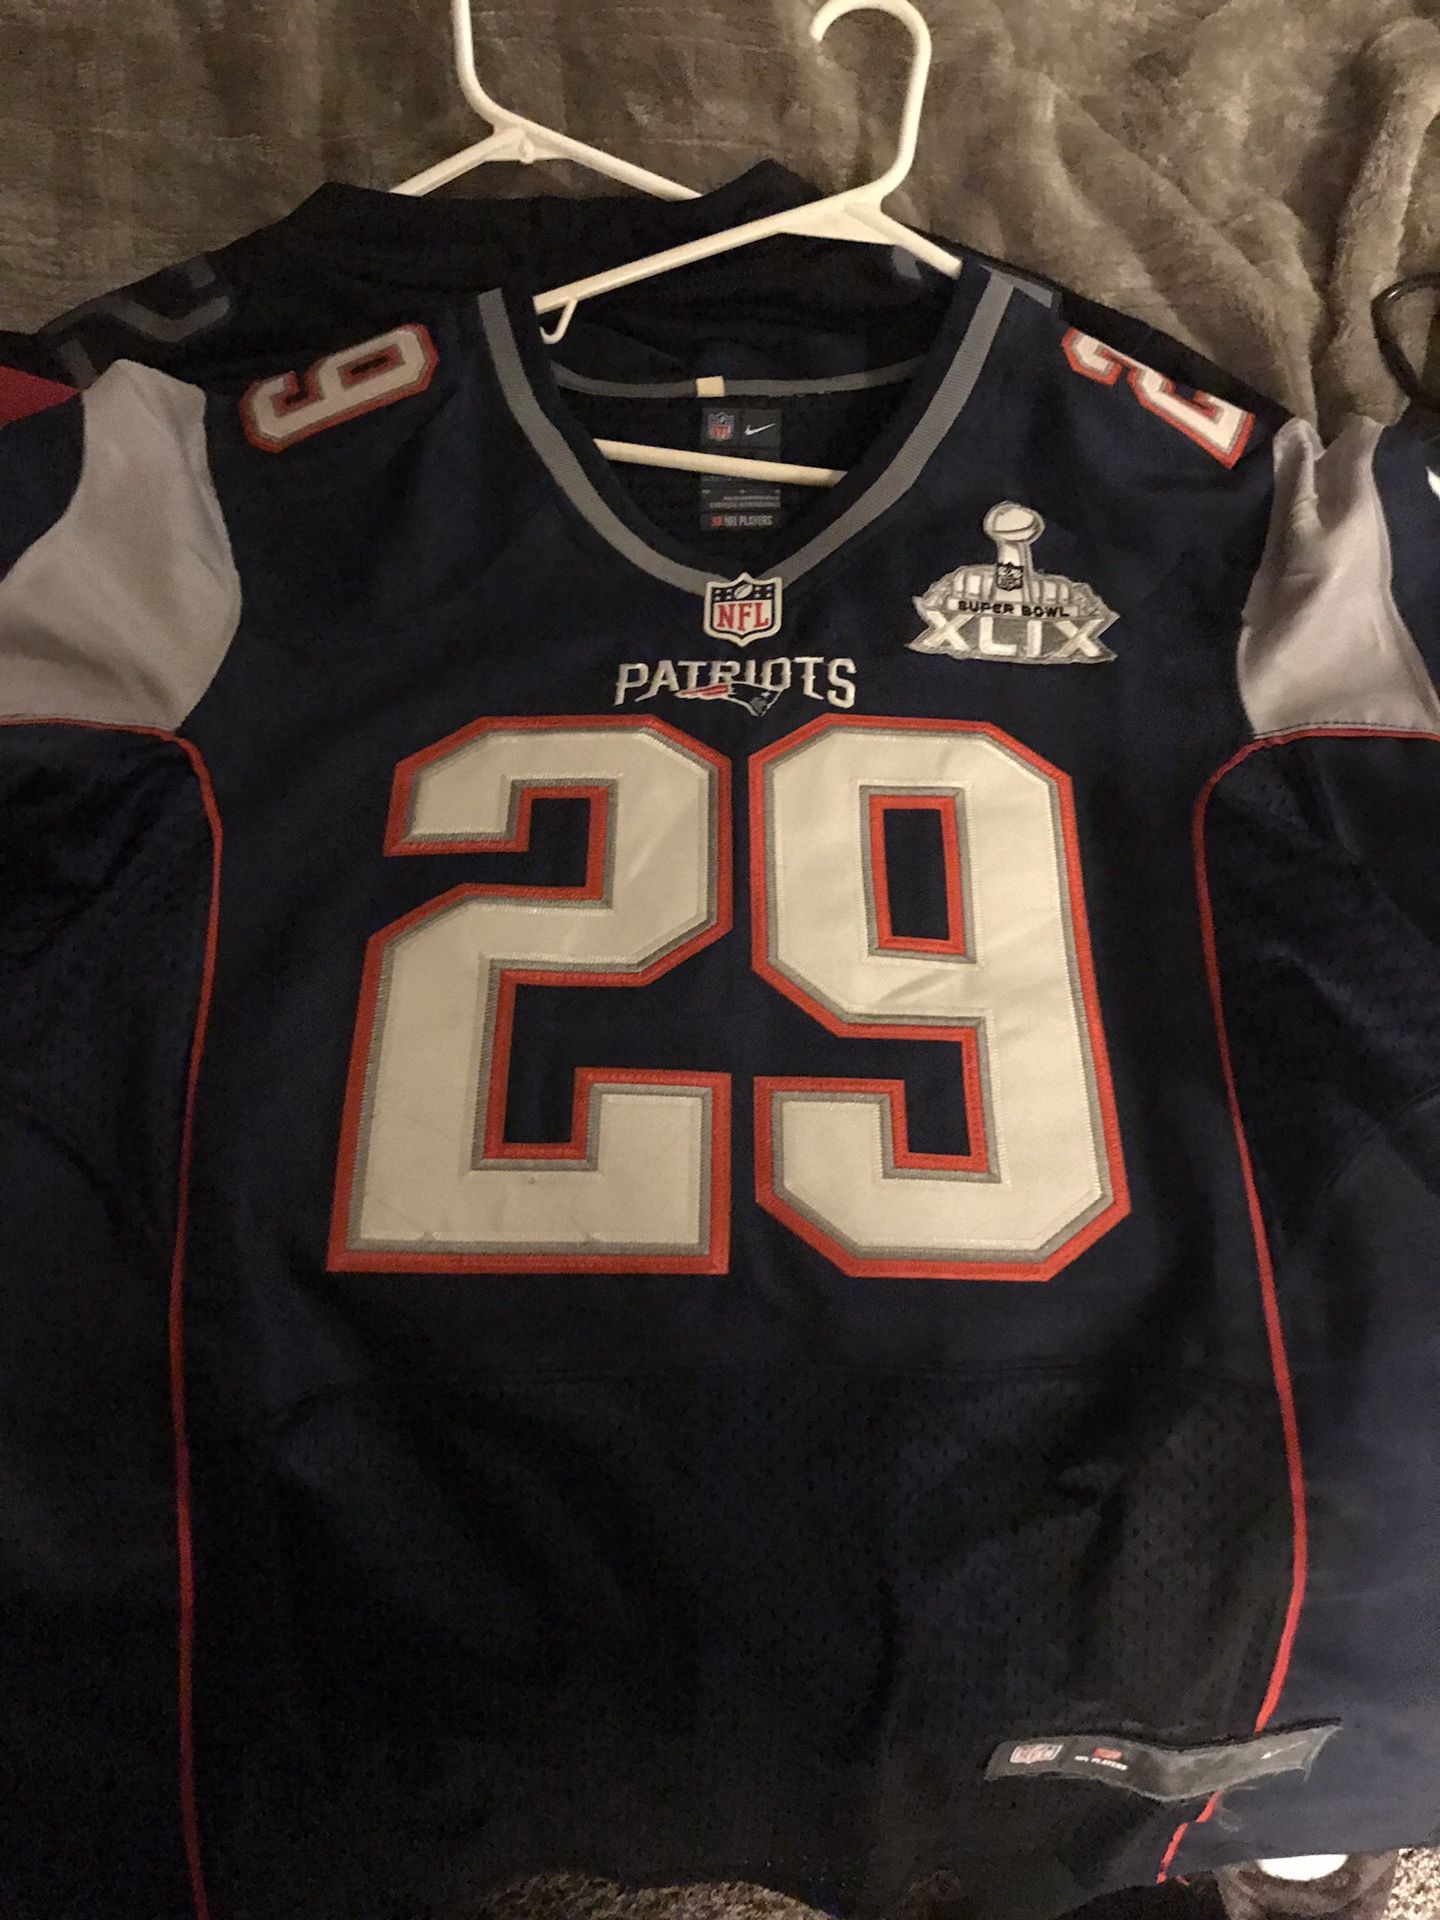 Patriots #29 Nike 44 Blount jersey